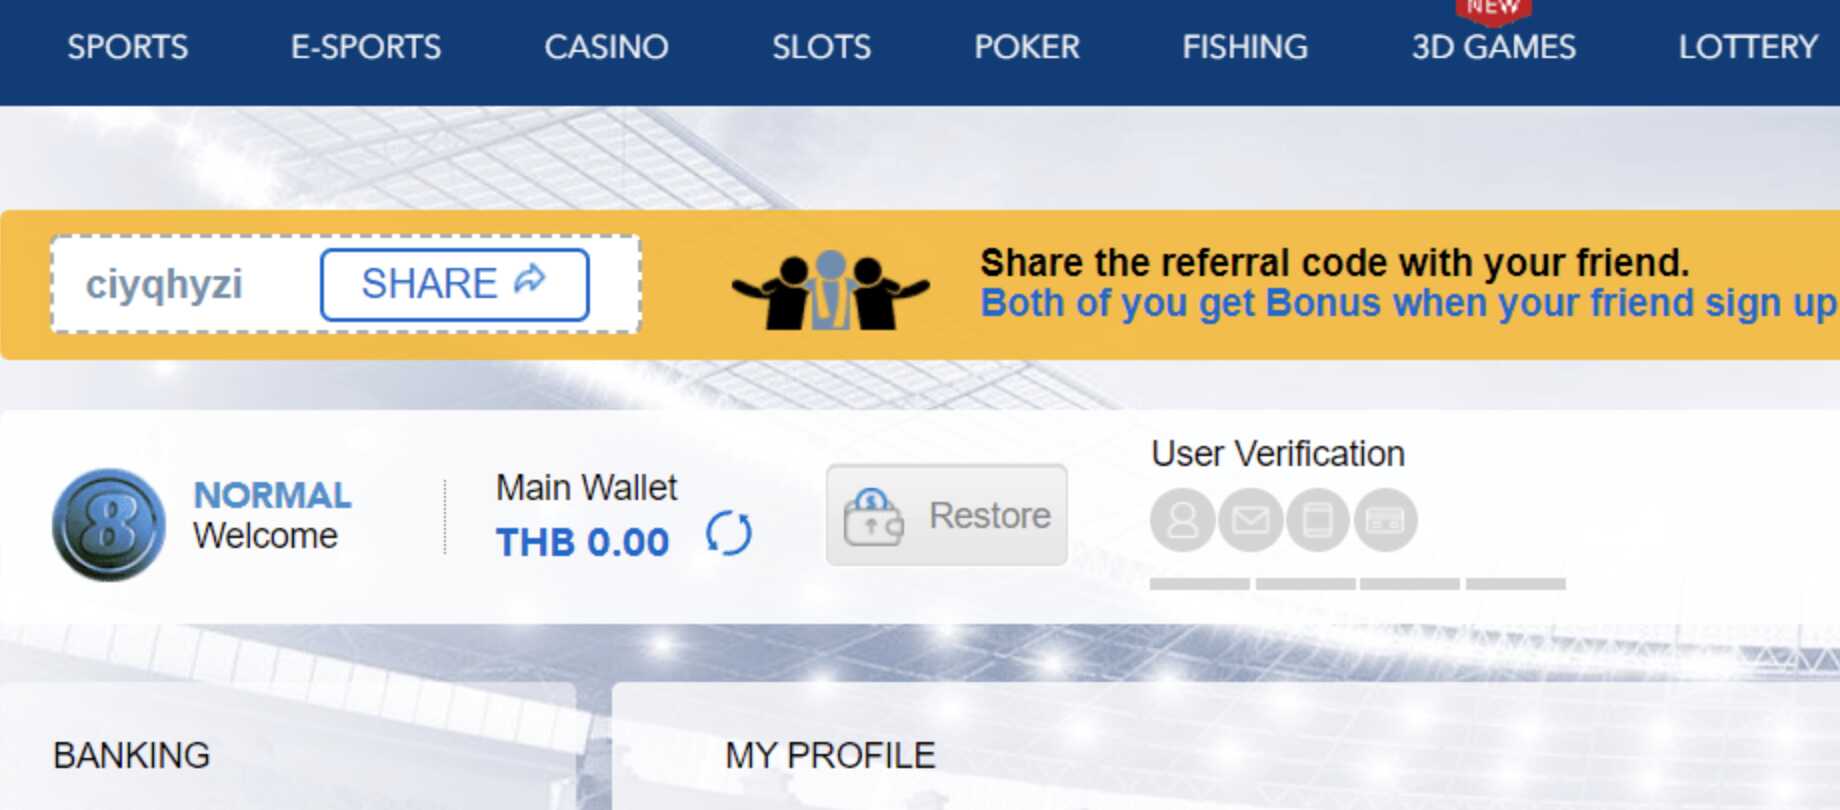 bk8 sportsbook malaysia - user verification page screen